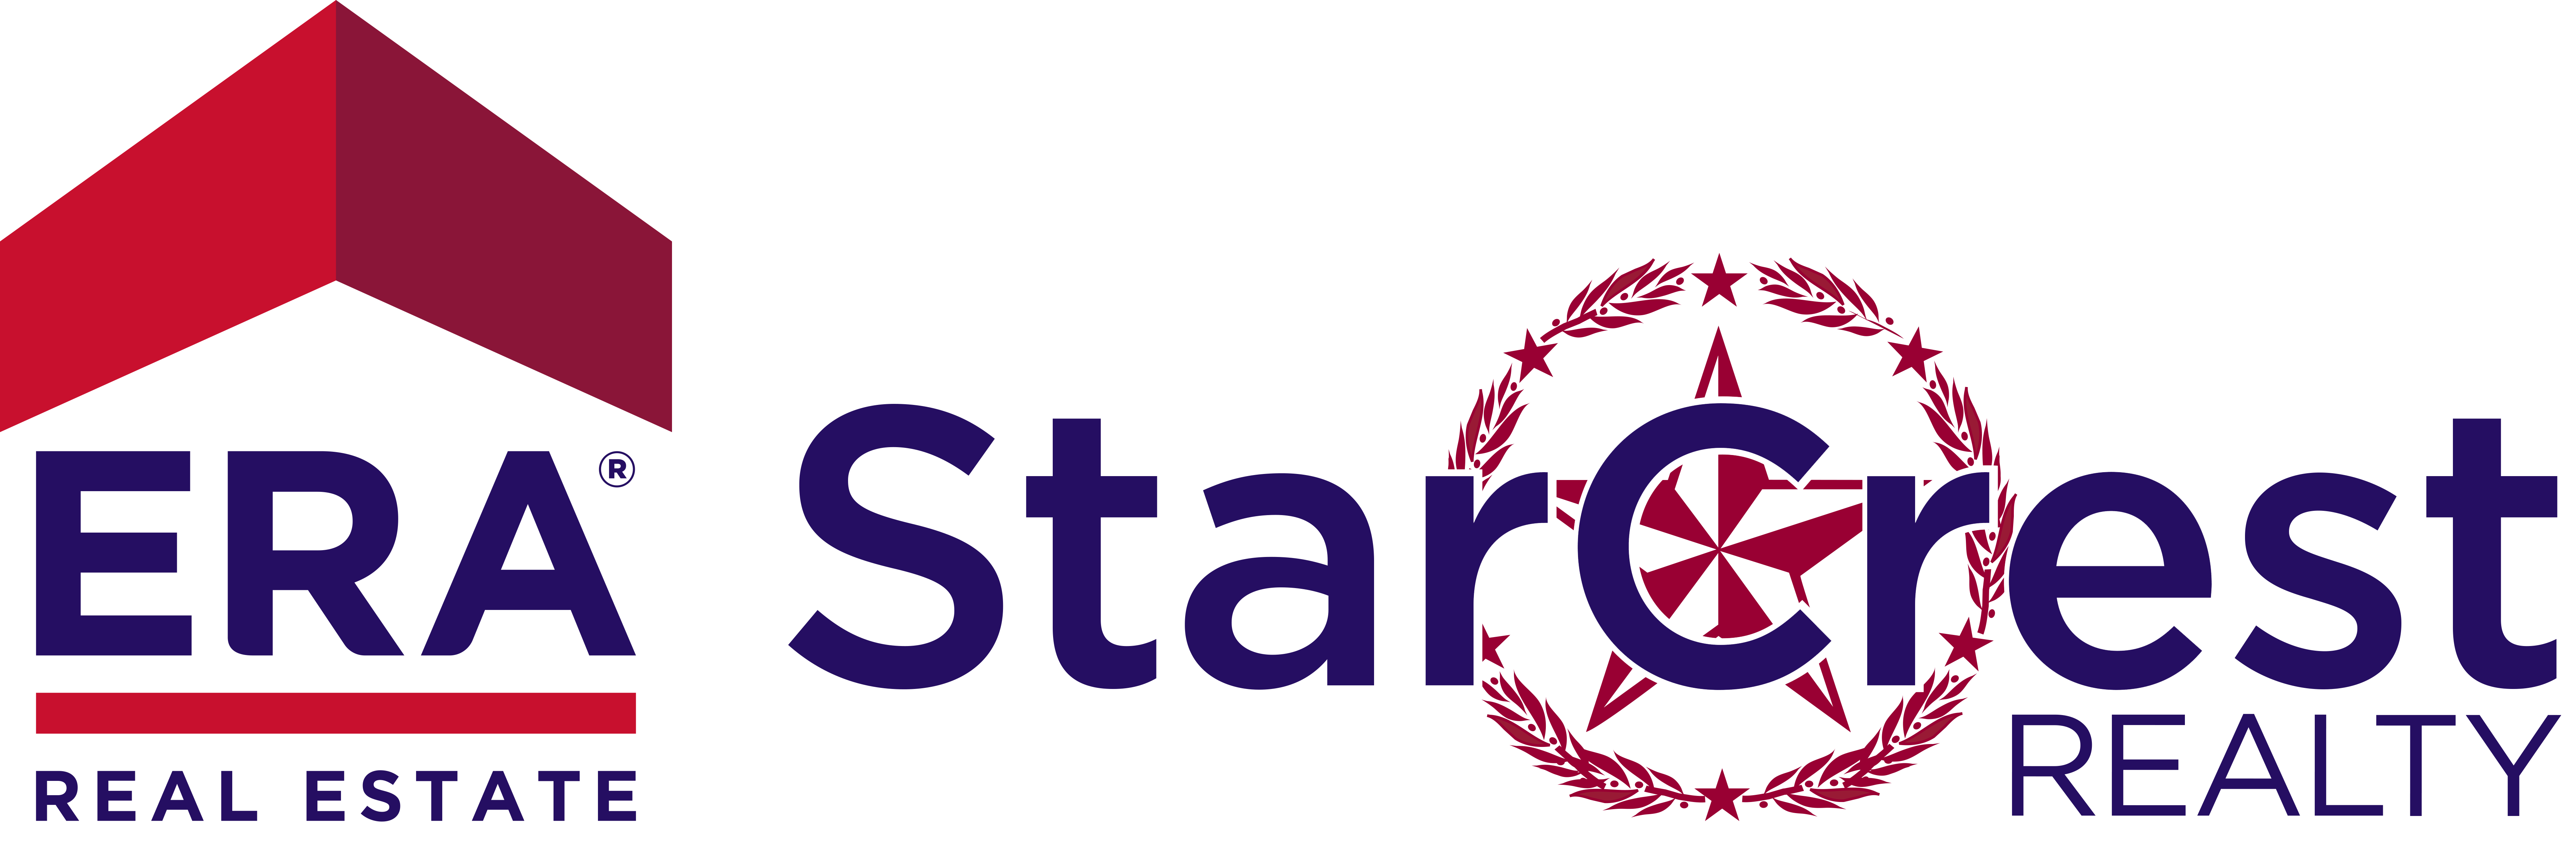 ERA StarCrest Realty, LLC logo